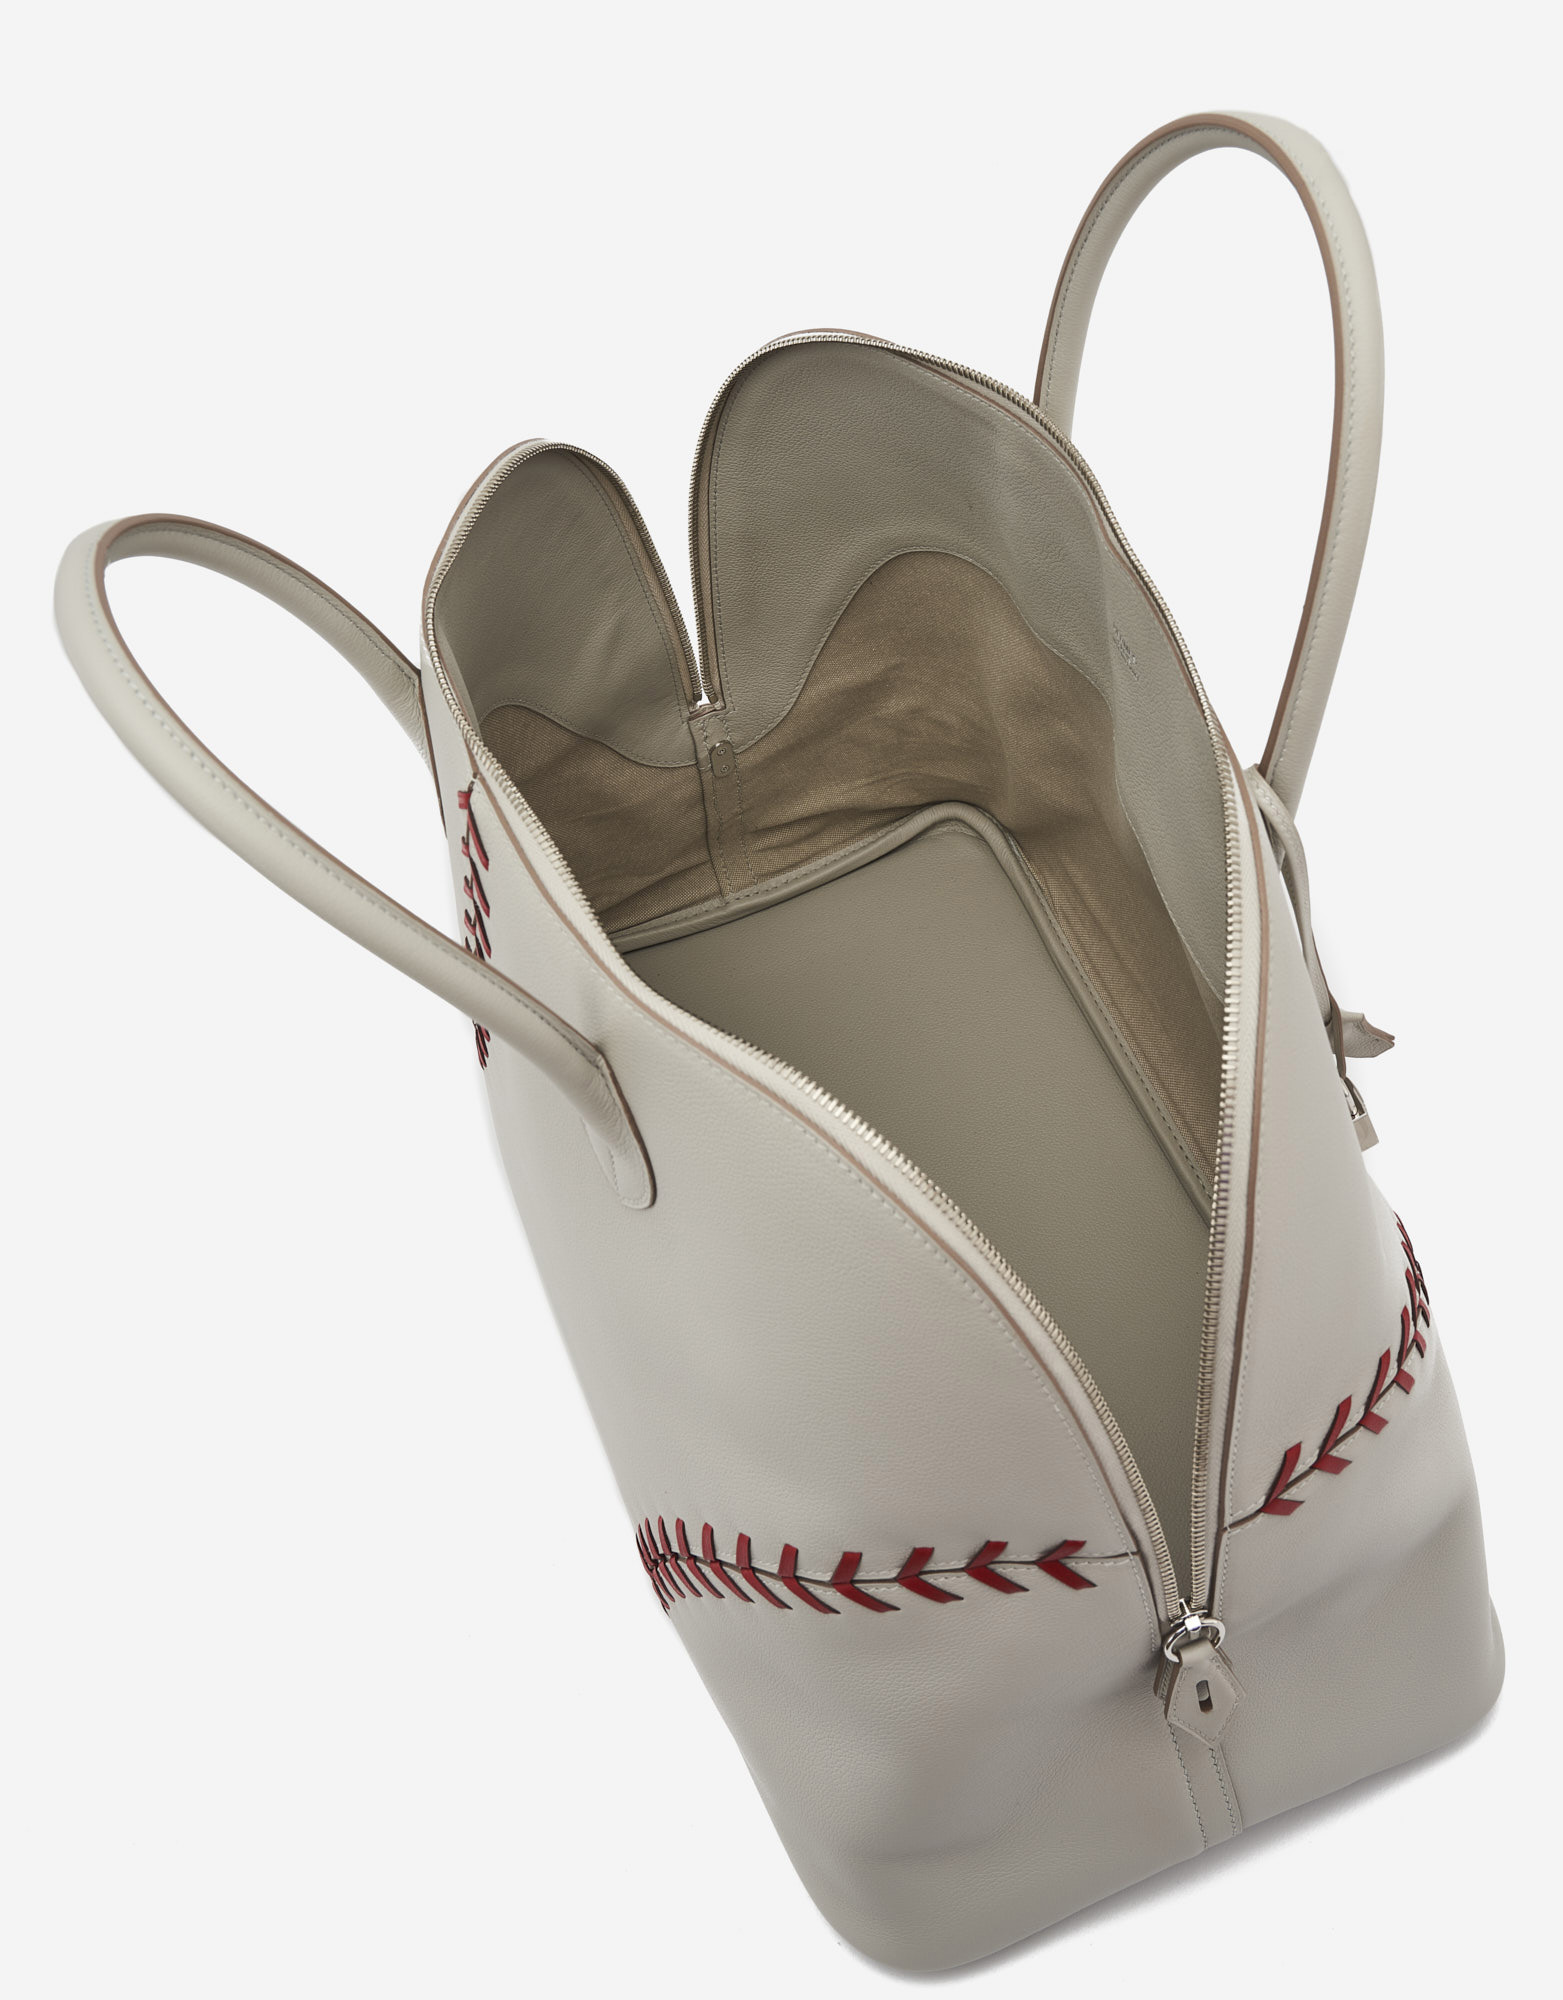 Hermès Bolide 45 1923 Baseball Gris Perle Rouge Evercolor Travel Bag